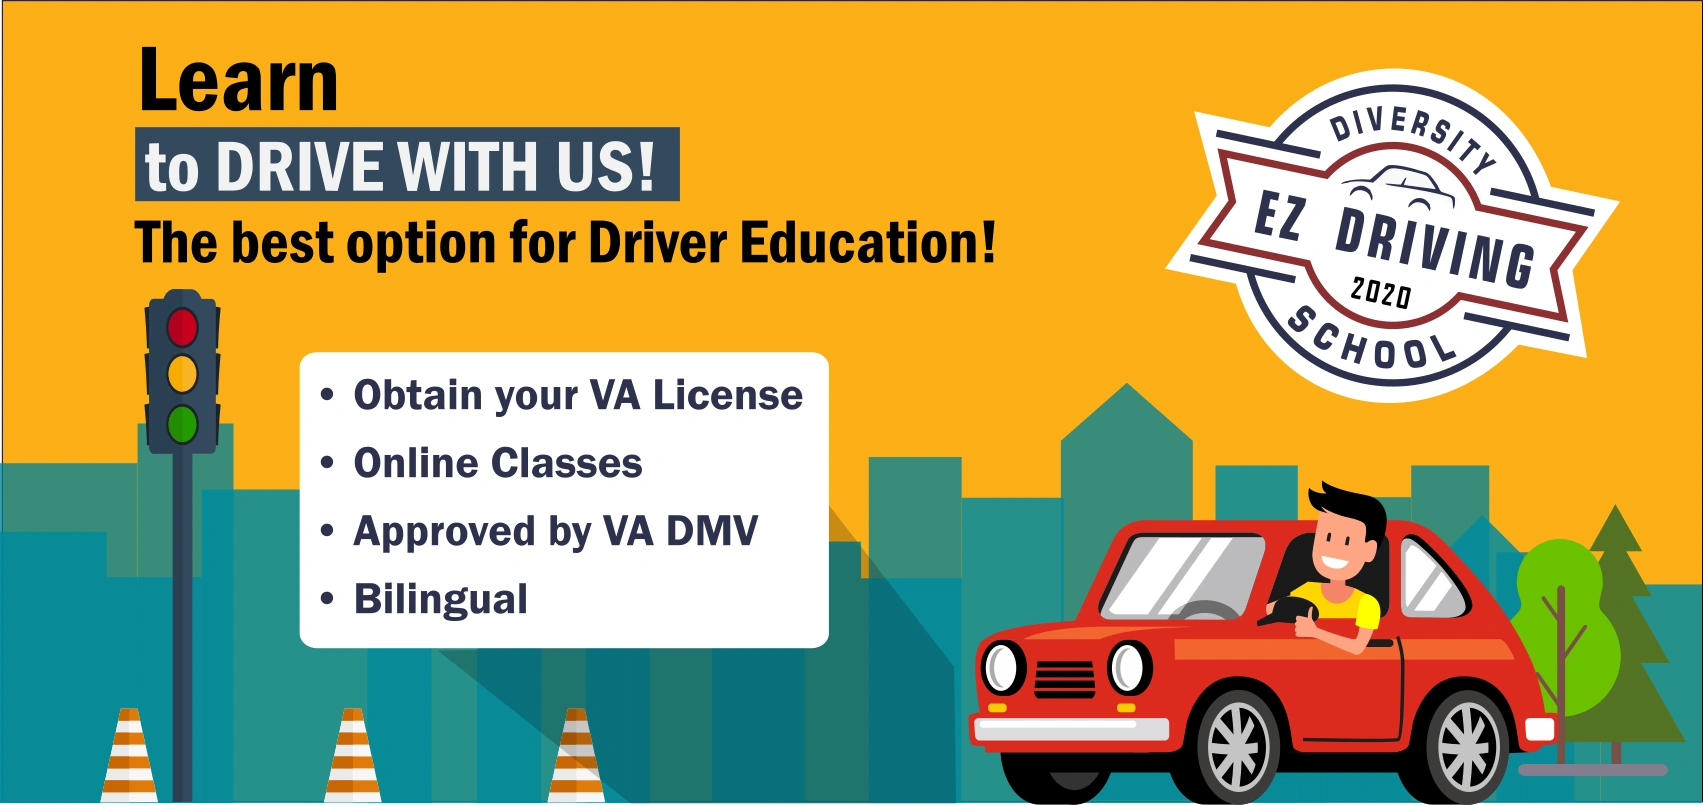 Diversity EZ Driving School. 
The best option for Driver Education
